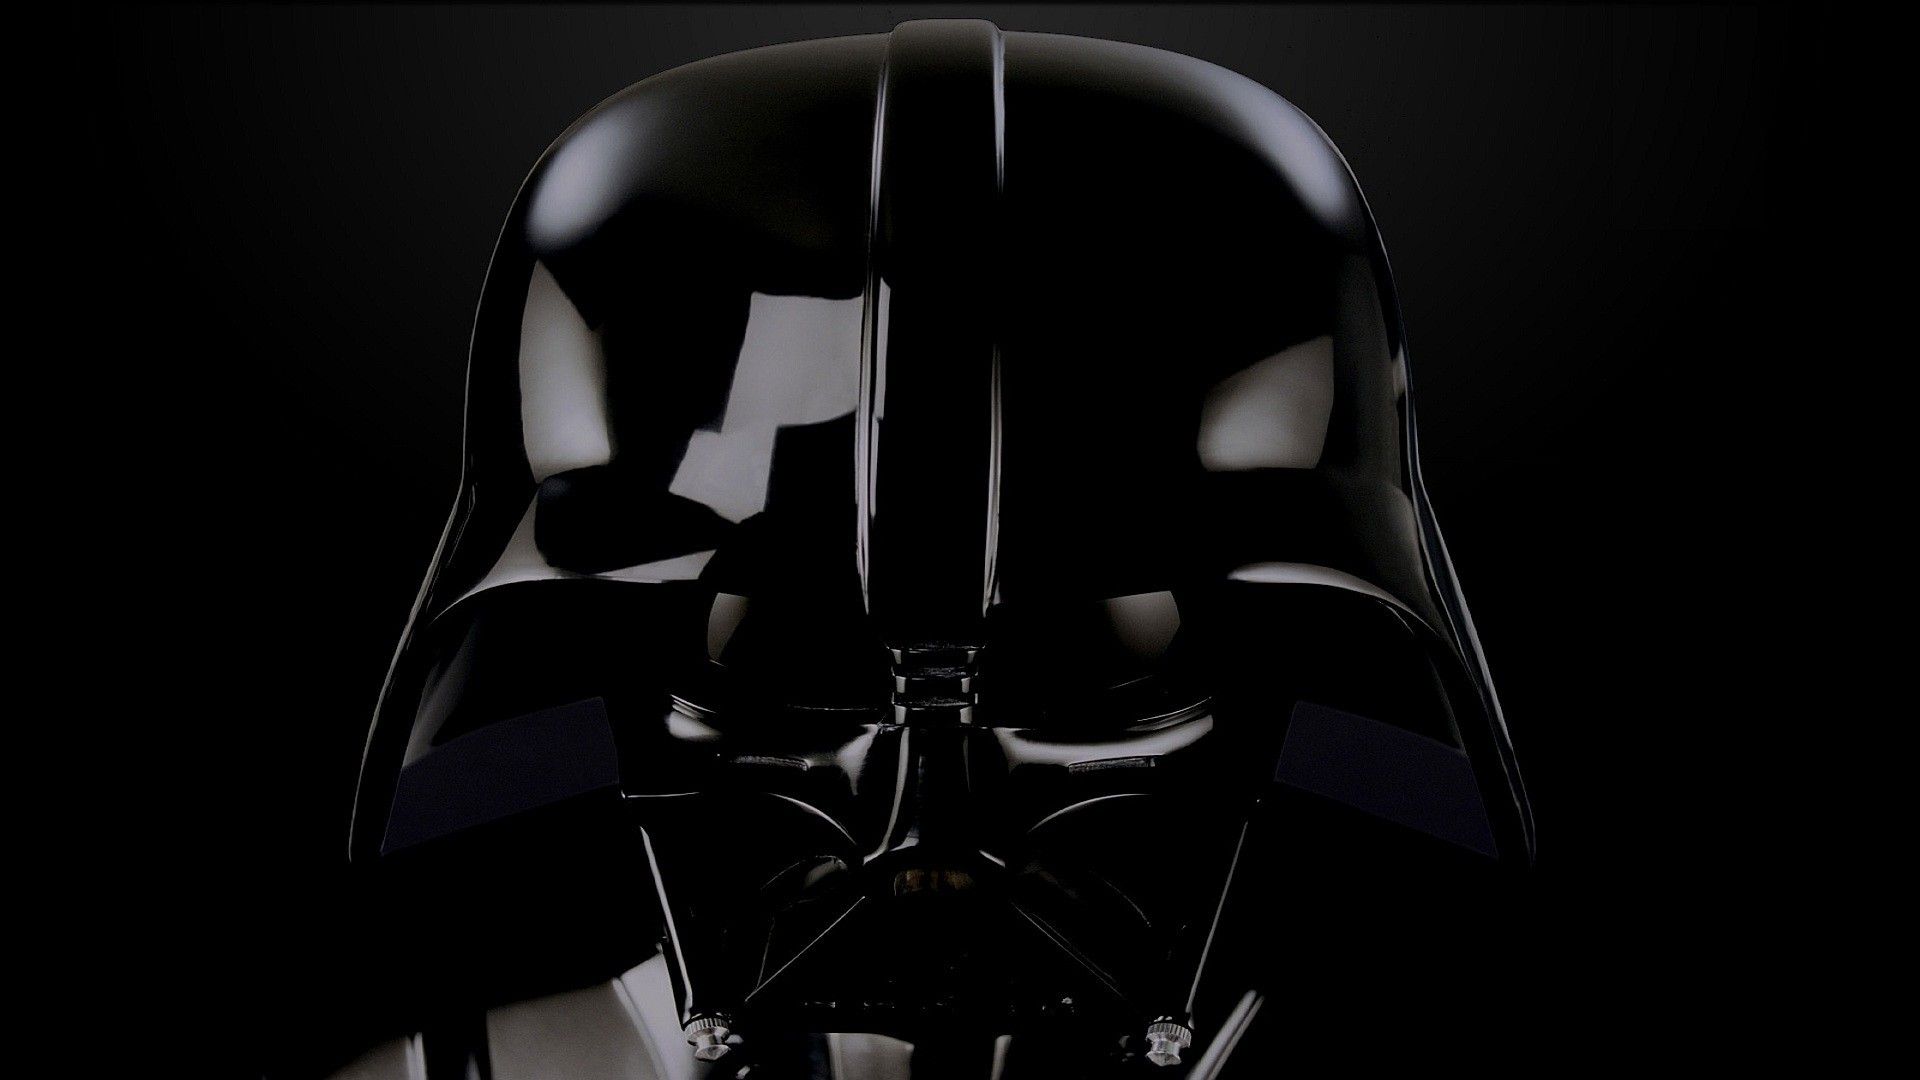 Download 1920x1080 Darth Vader helmet wallpaper